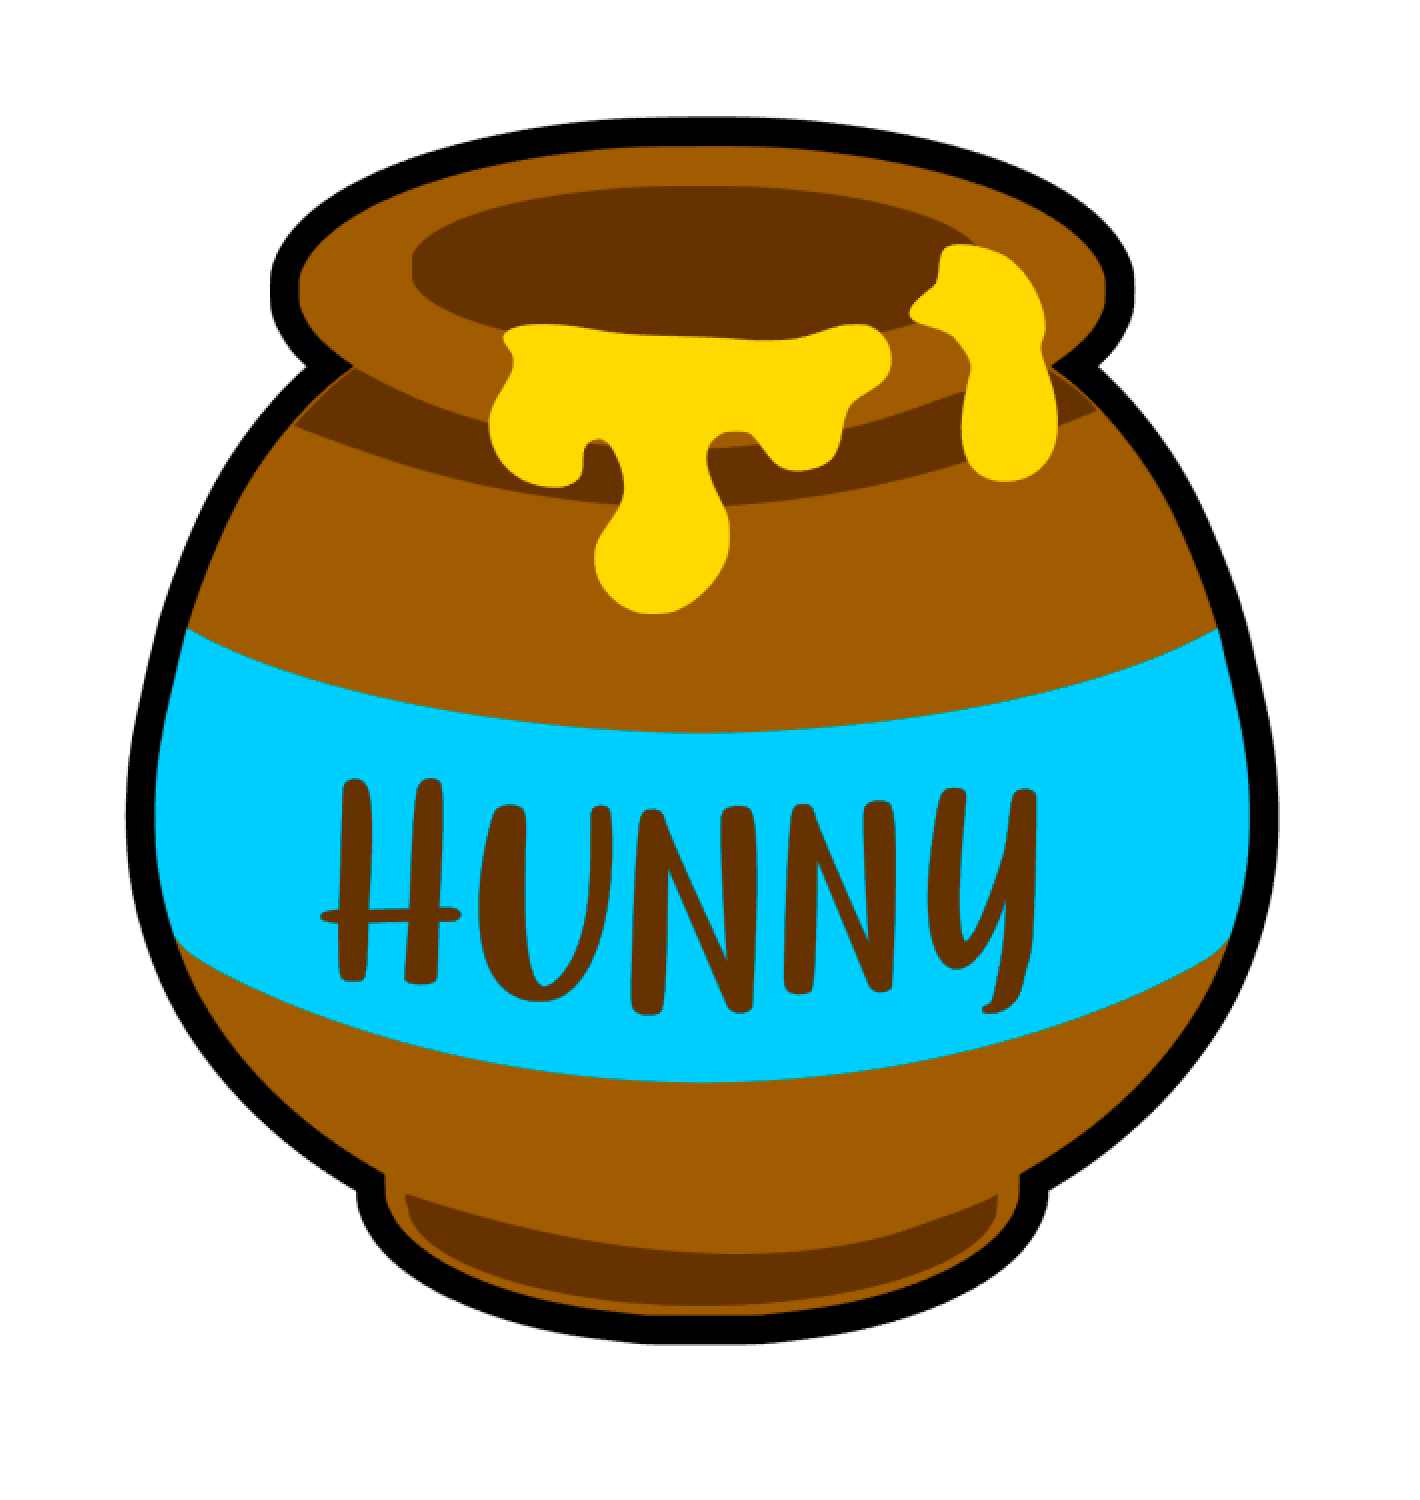 winnie the pooh honey jar clip art